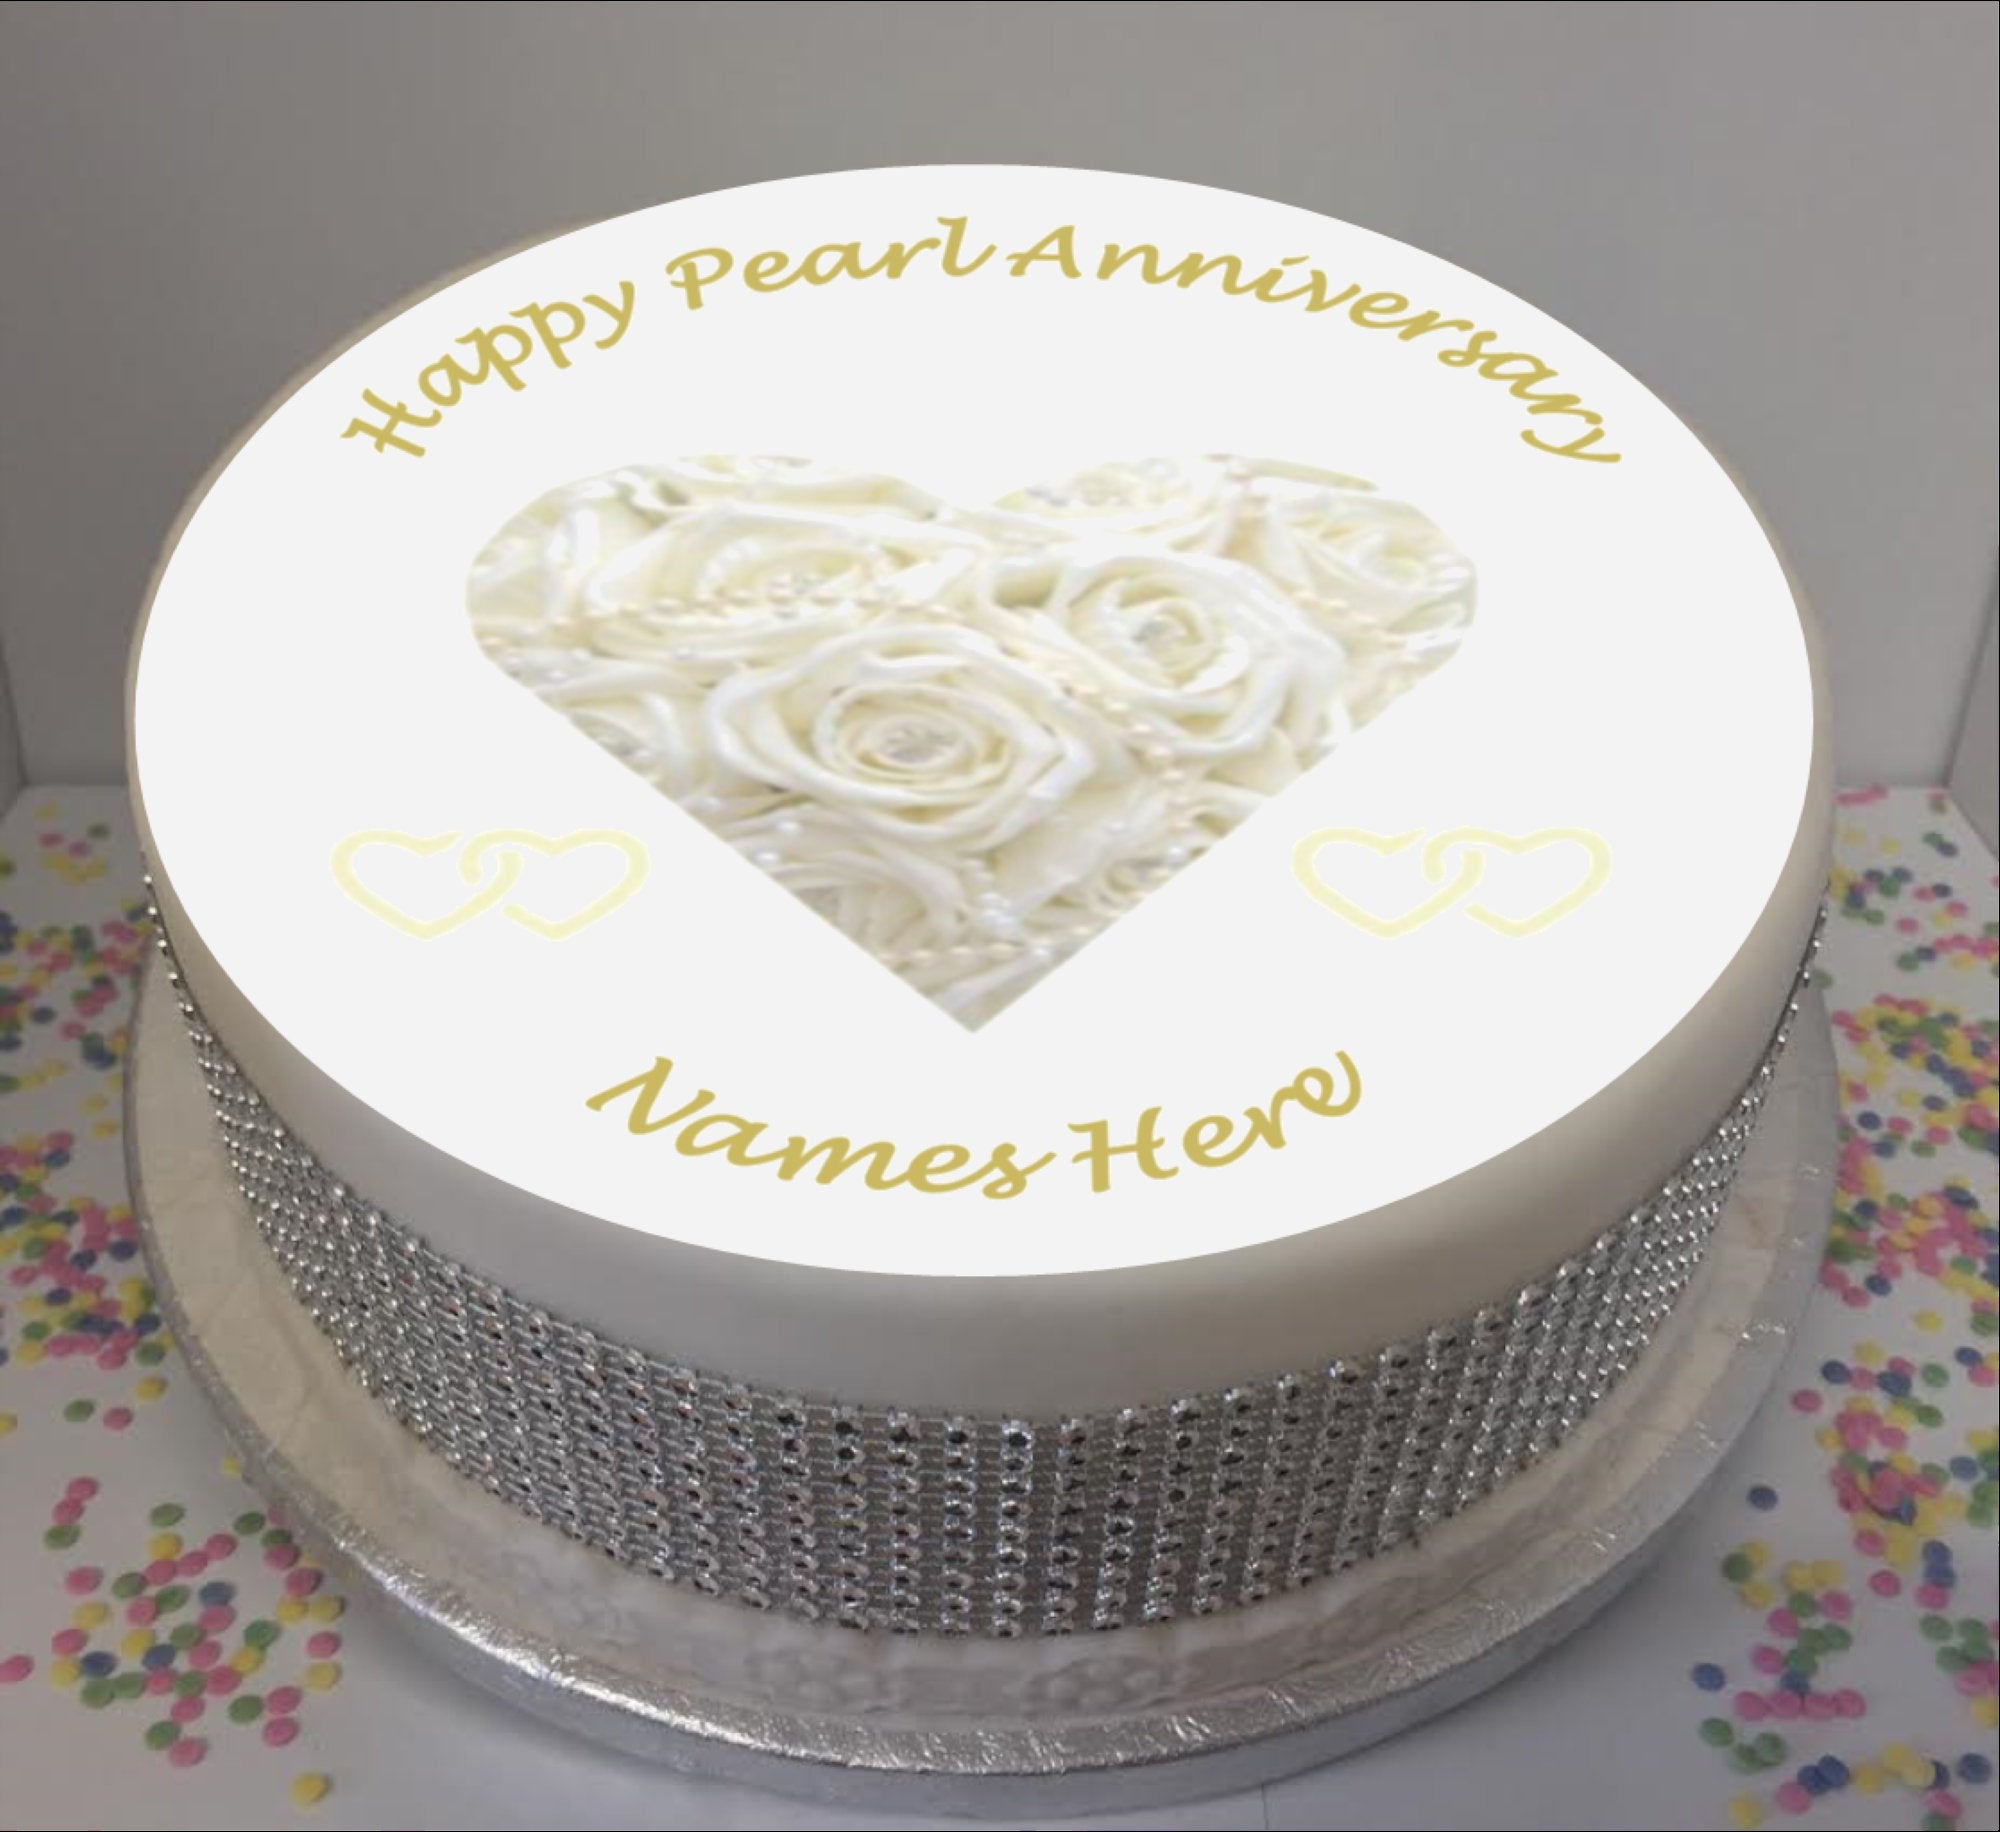 Pearl Anniversary Cake - Kimboscakes